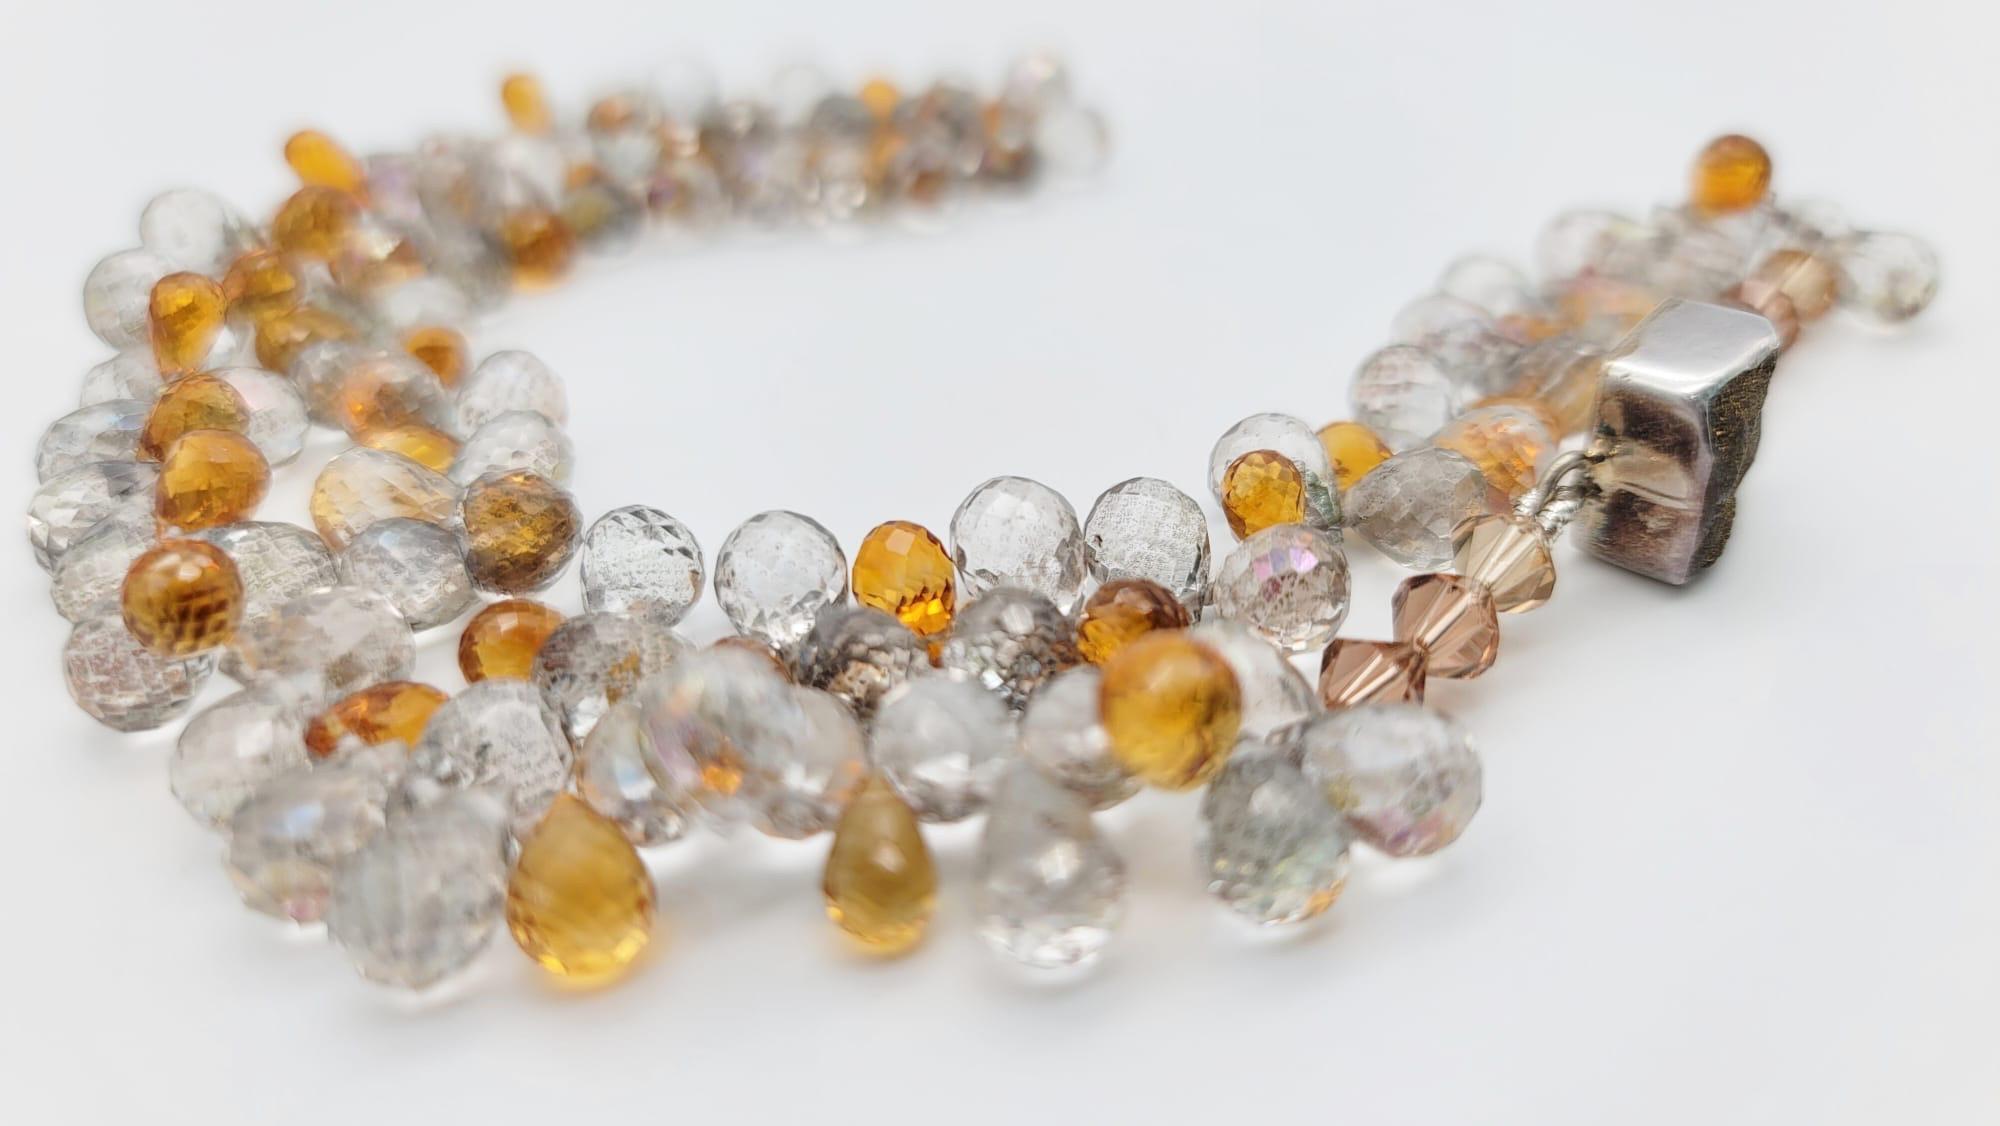 A.Jeschel  Stunning Topaz and Crystal Quartz teardrop necklace For Sale 1